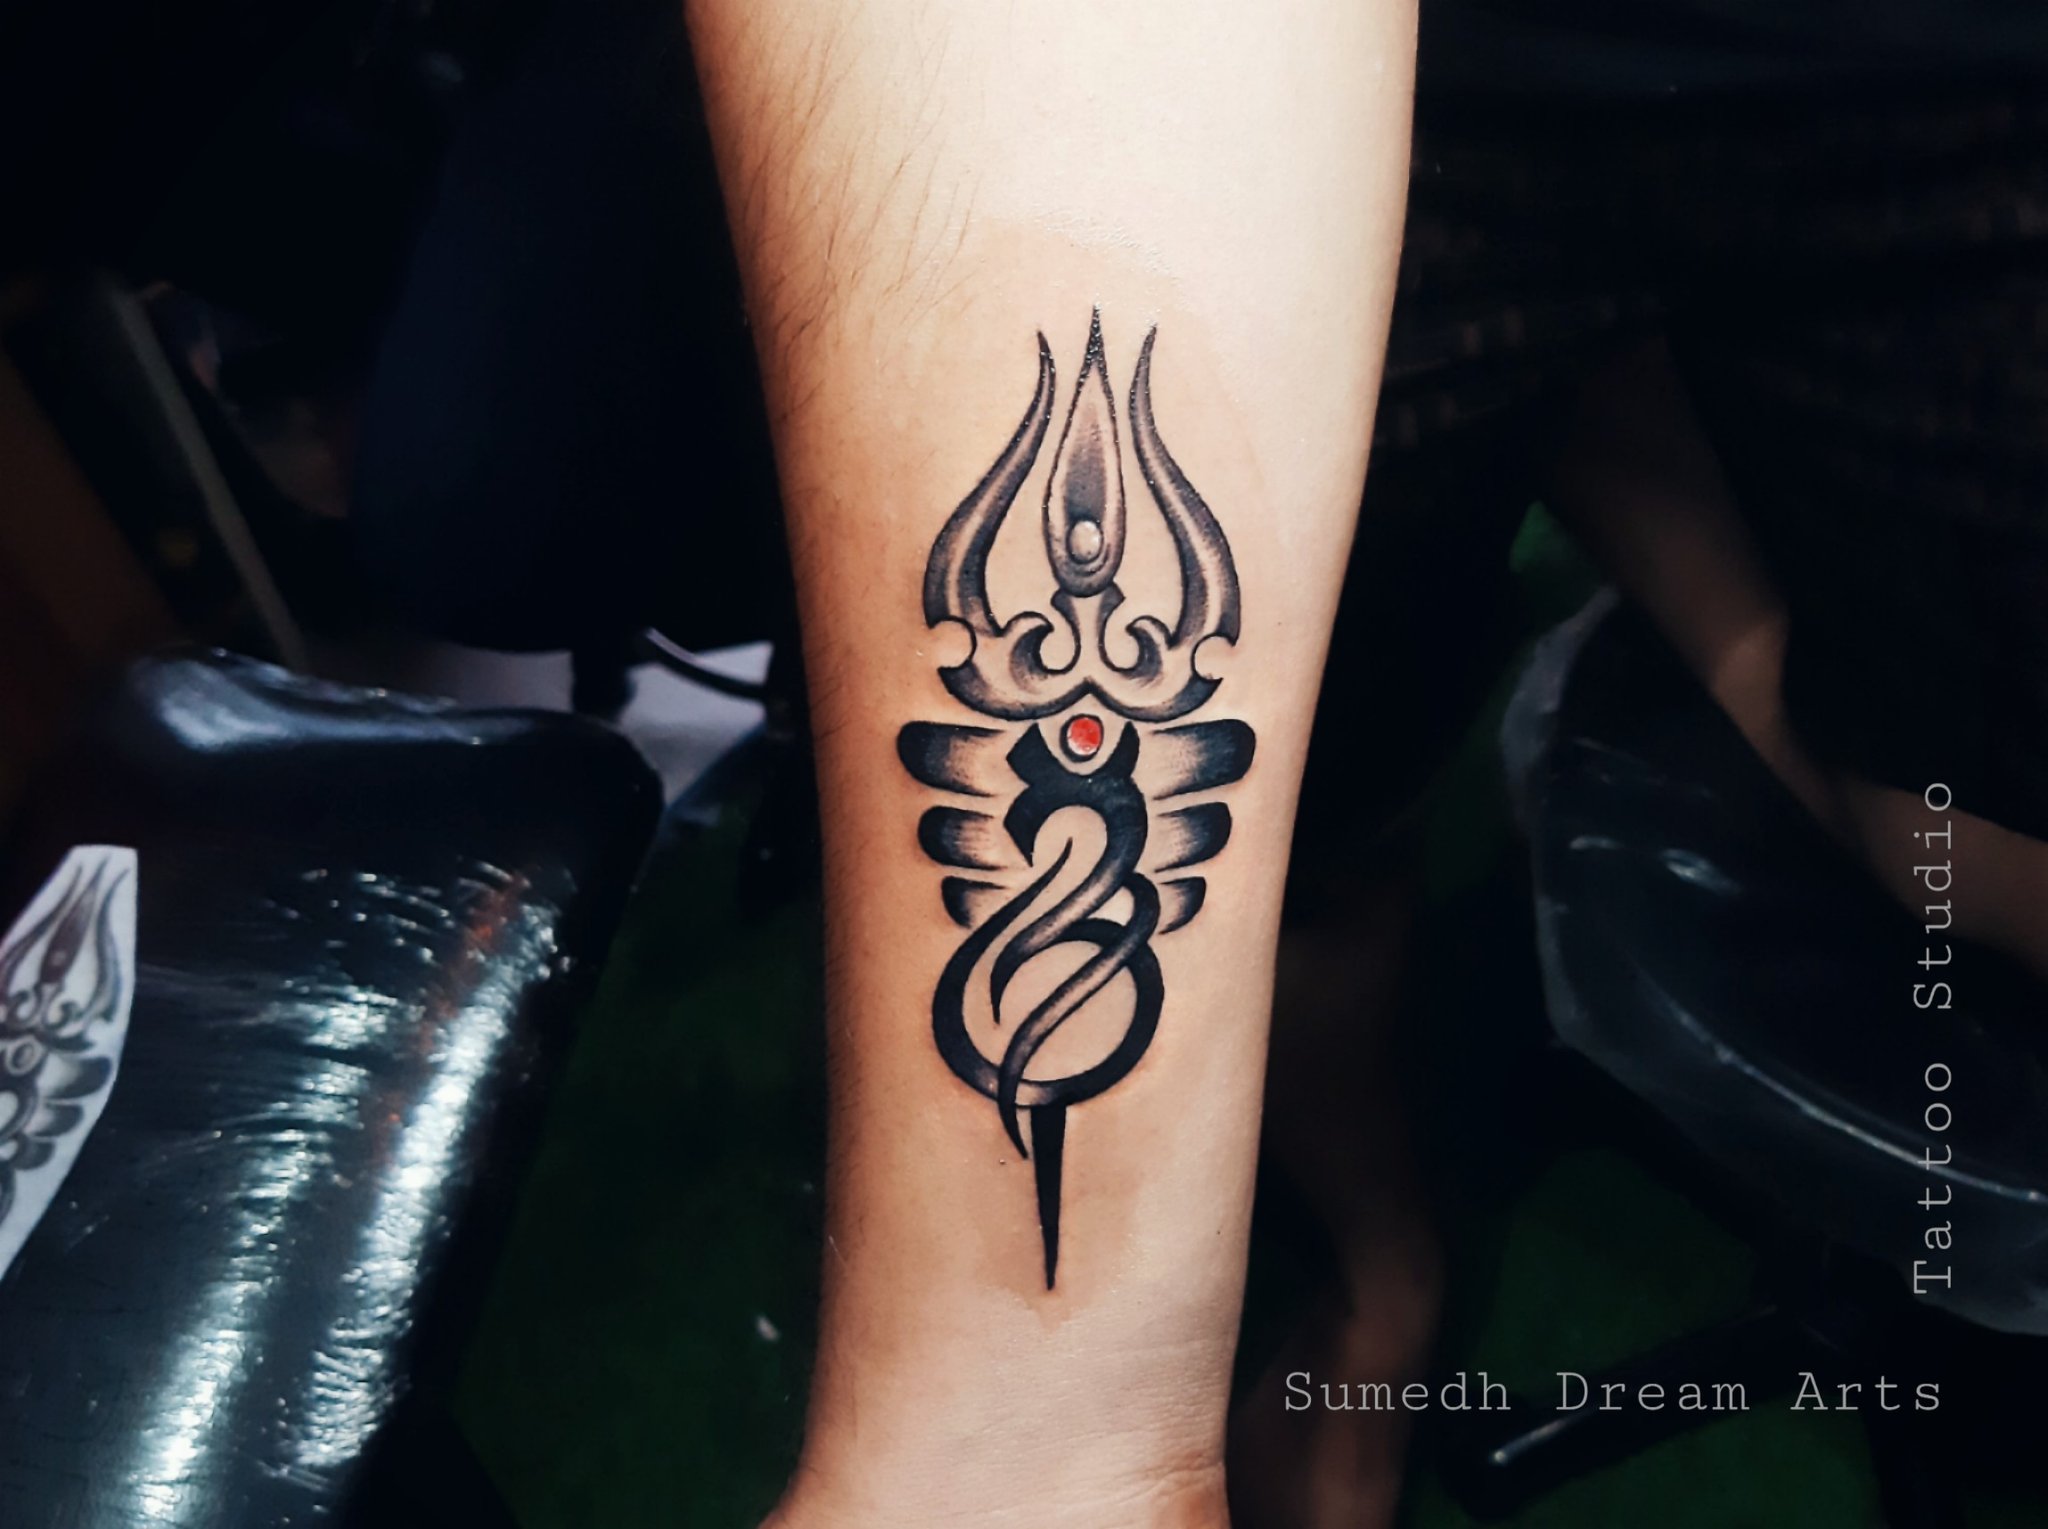 sumedh_dream_arts on X: "#$..Mahadev Trishul Tattoo design By..@sumedh_dream_arts https://t.co/g8A2AOB3K4" / X